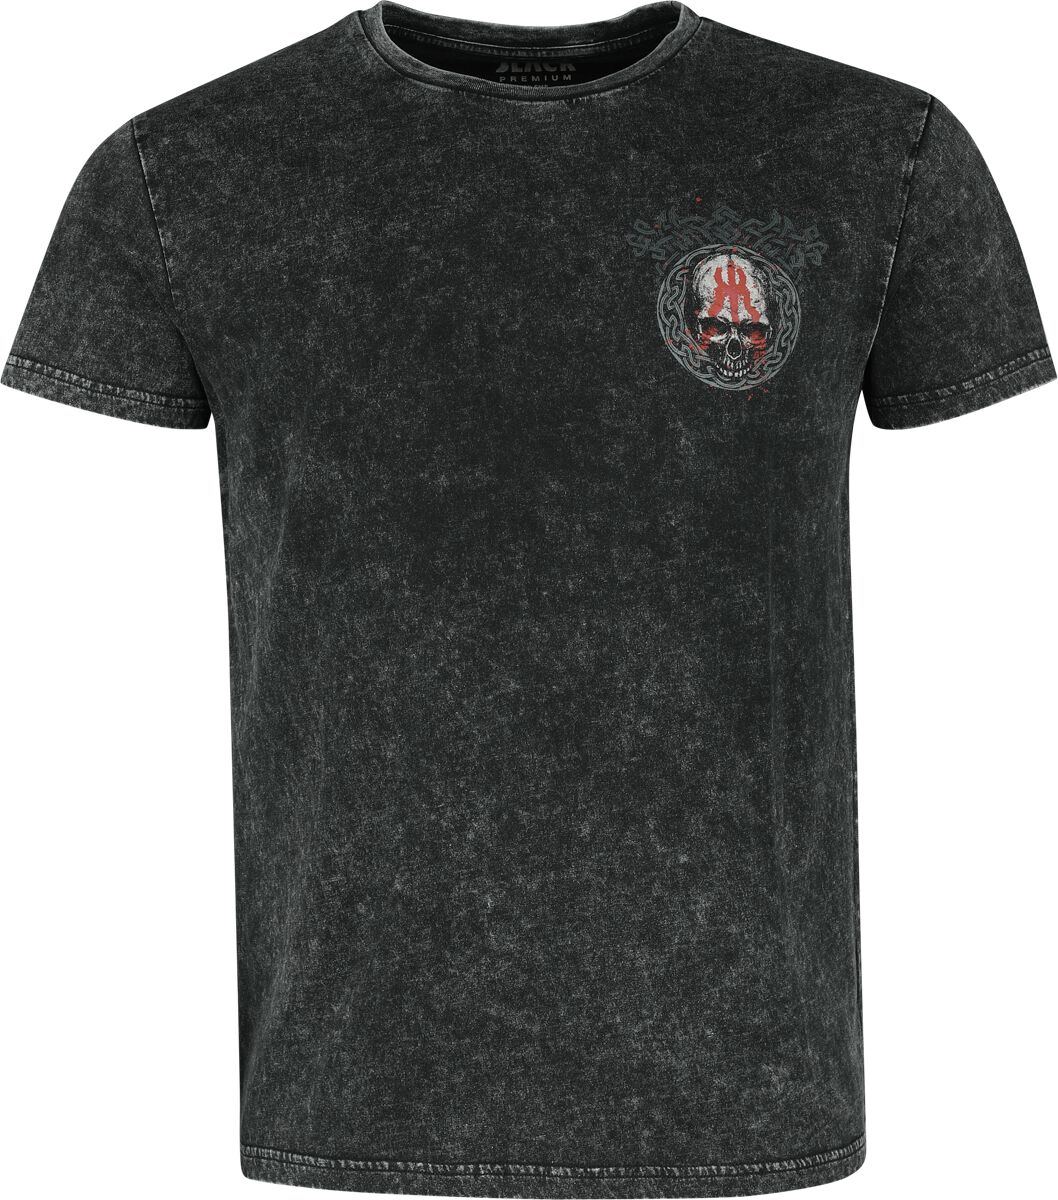 Black Premium by EMP T-Shirt With Skull Print T-Shirt schwarz in L